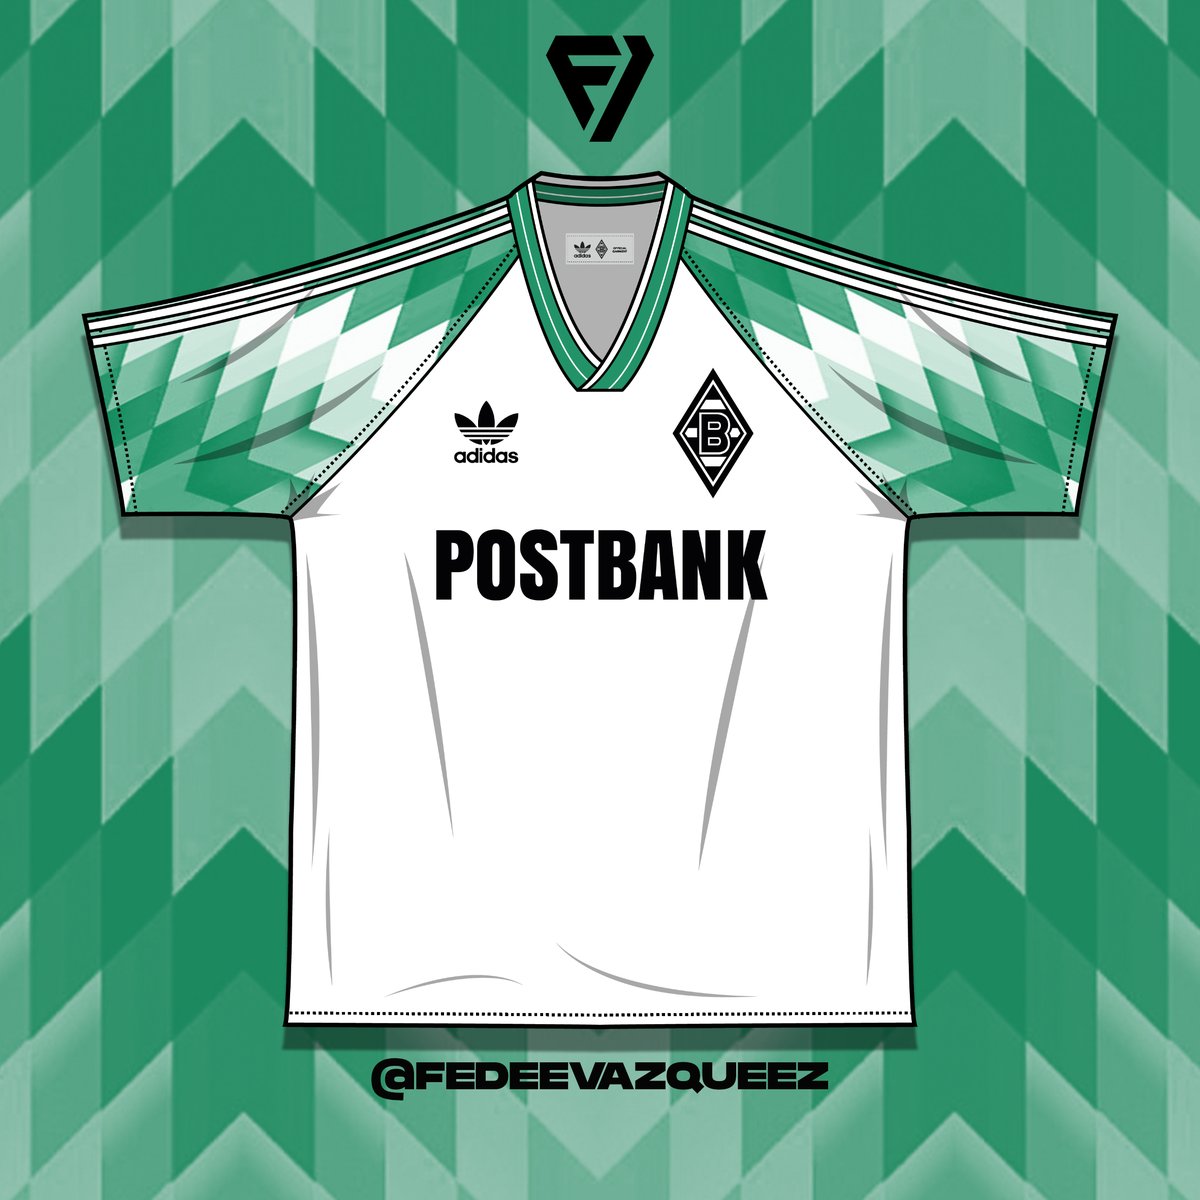 Estándar Comportamiento brumoso Fede on Twitter: "Borussia Mönchengladbach x Adidas - 1990 template.  @borussia_es @borussia @borussia_en @BorussiaM_arg Home - Away - Third  kits. https://t.co/jU13A765ak" / Twitter